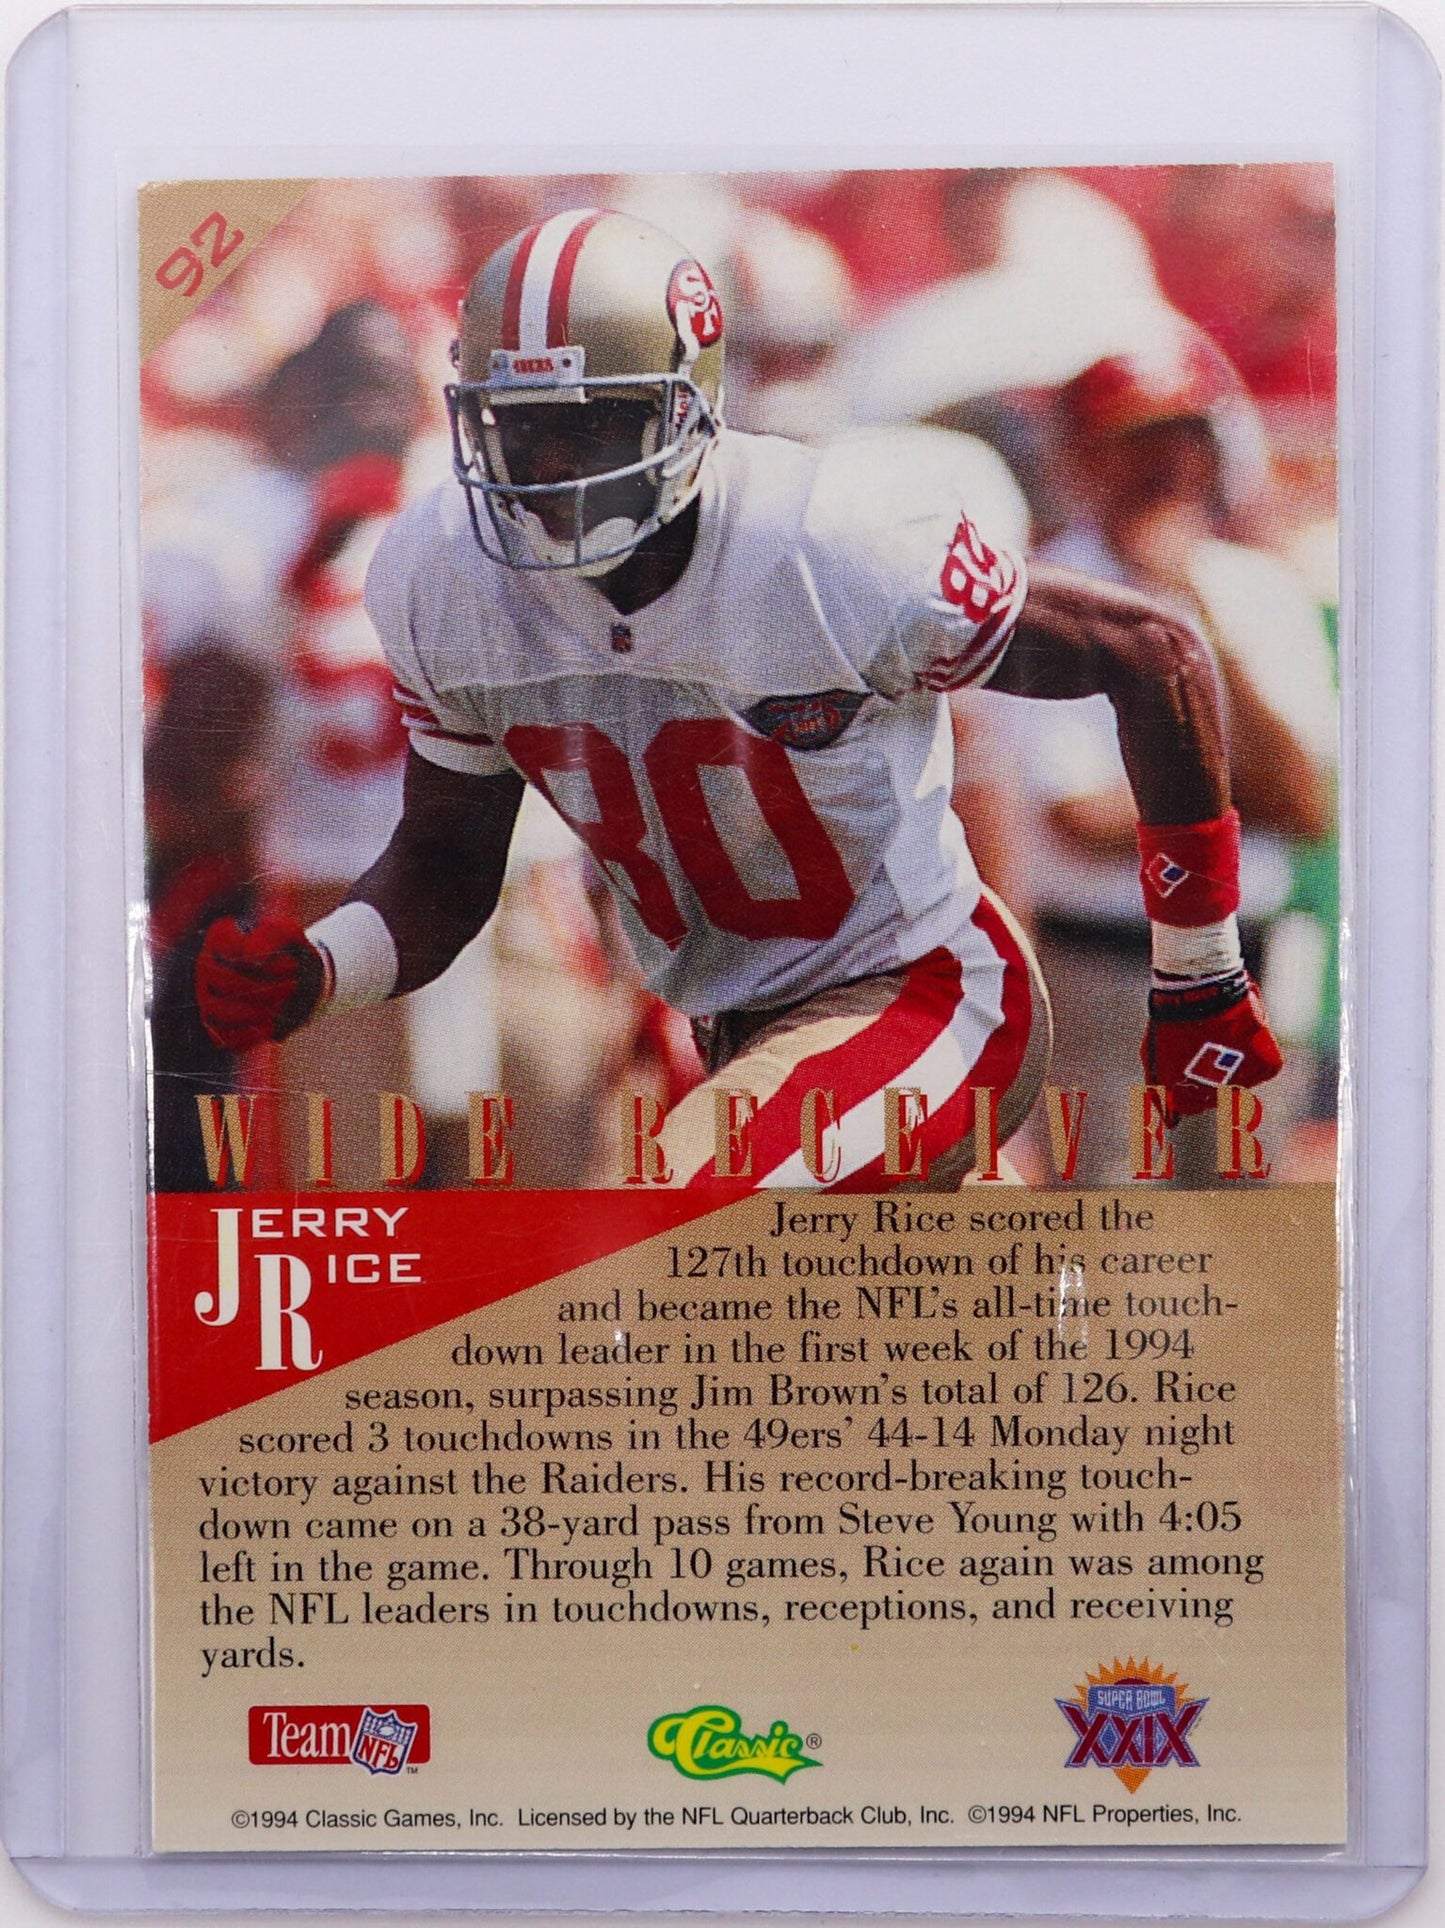 1985 Classic Super Bowl XIX NFL Experience Jerry Rice #92, Mint